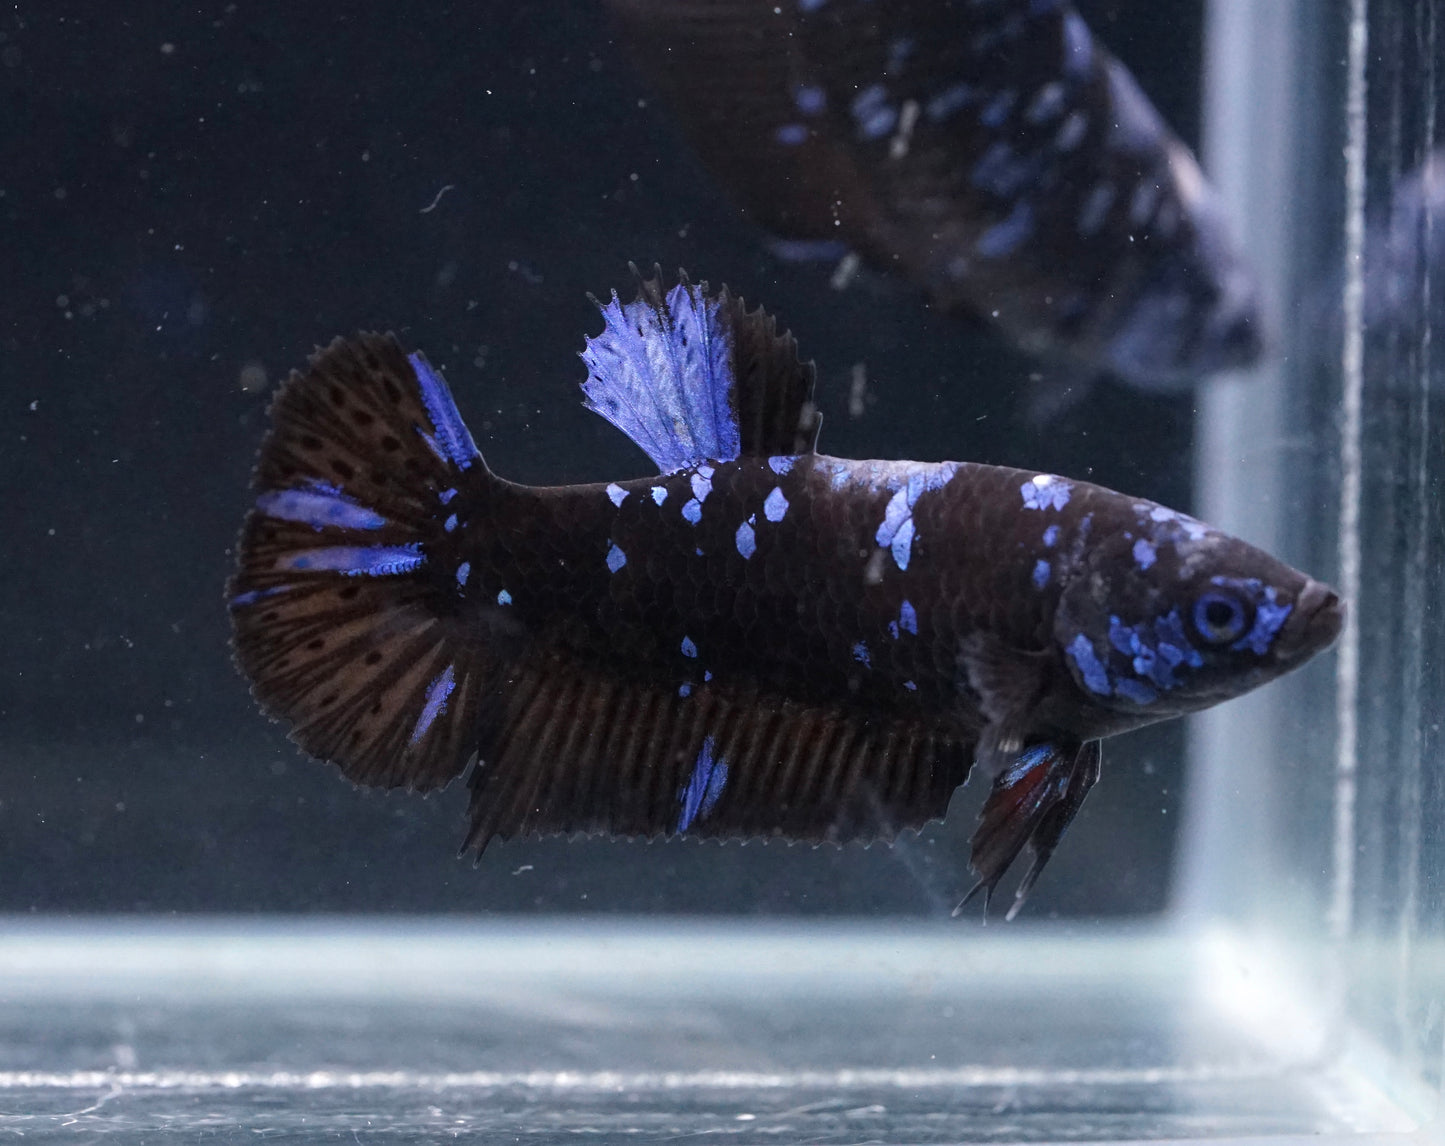 Breeding Pair - #1 Black Blue Avatar Galaxy - Premium Grade Betta Fish - Live Aquarium Fish